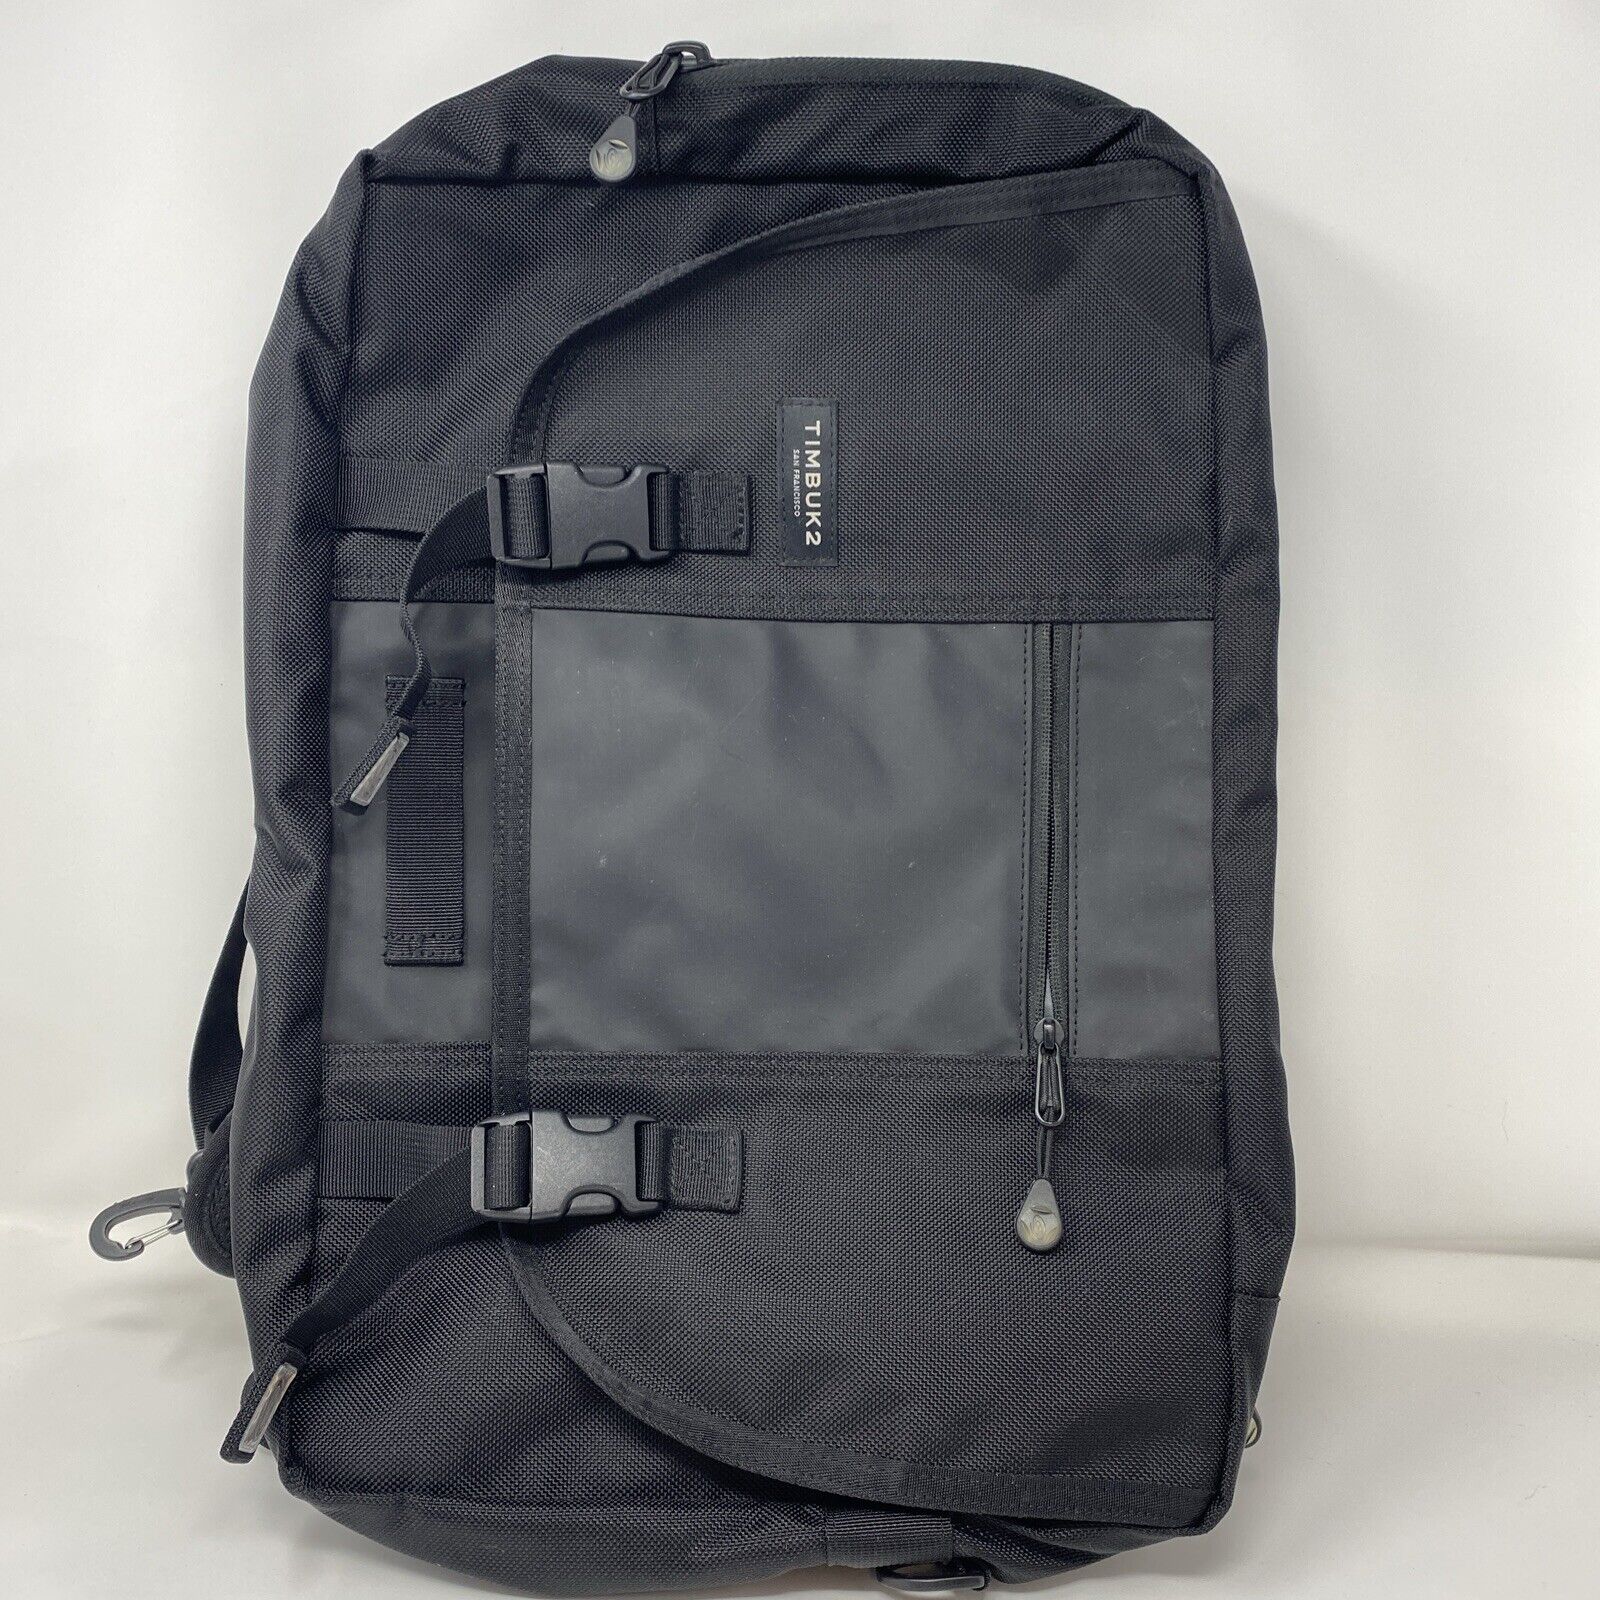 Timbuk2 San Francisco Messenger Bag Backpack Black Laptop 3-1 Travel VERY NICE